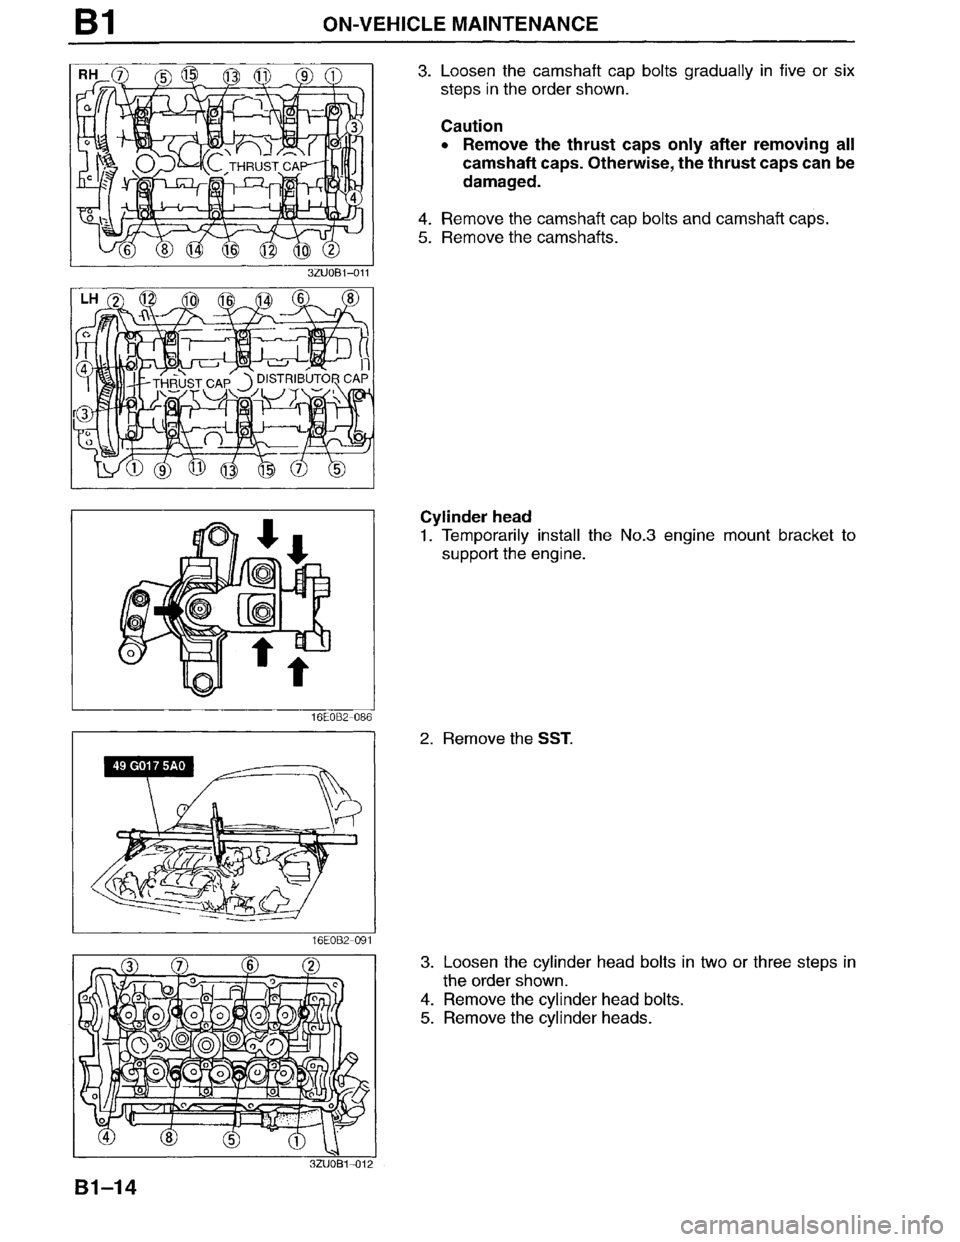 MAZDA MILLENIA 1996 Service Manual 